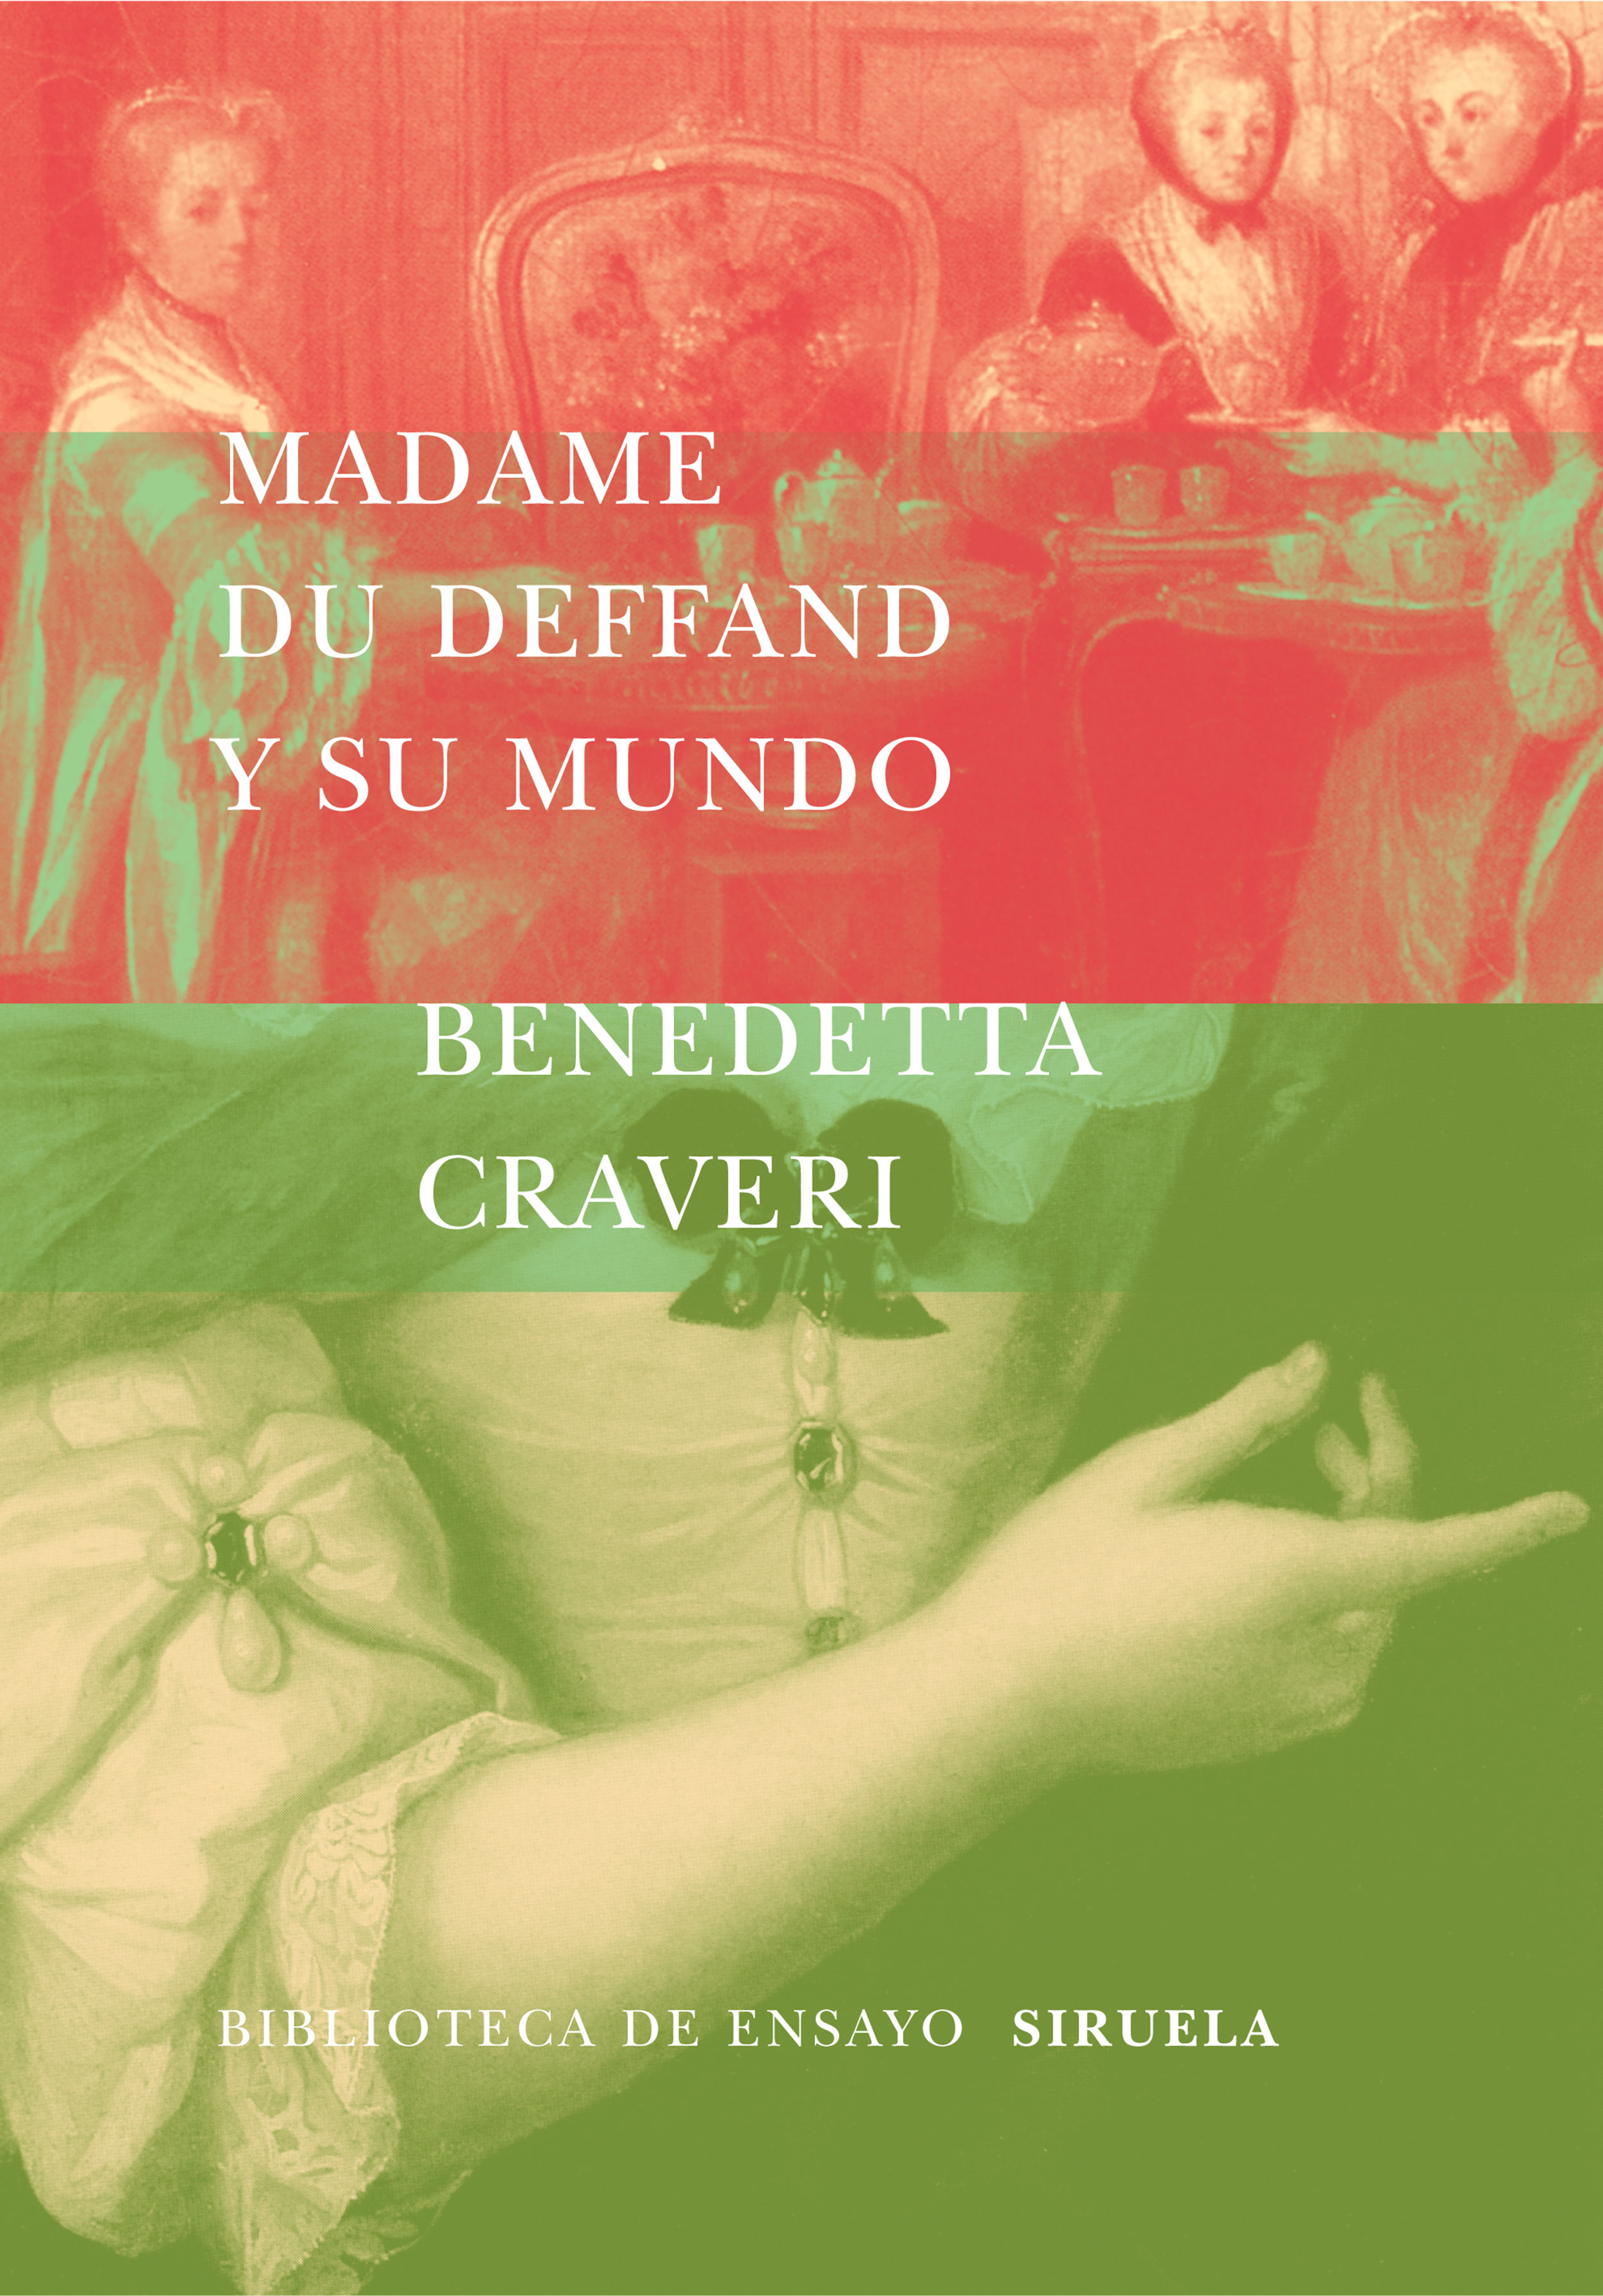 9788478448340 L38 04 x - Madame du Deffand y su mundo (Benedetta Craveri) - (Audiolibro Voz Humana)